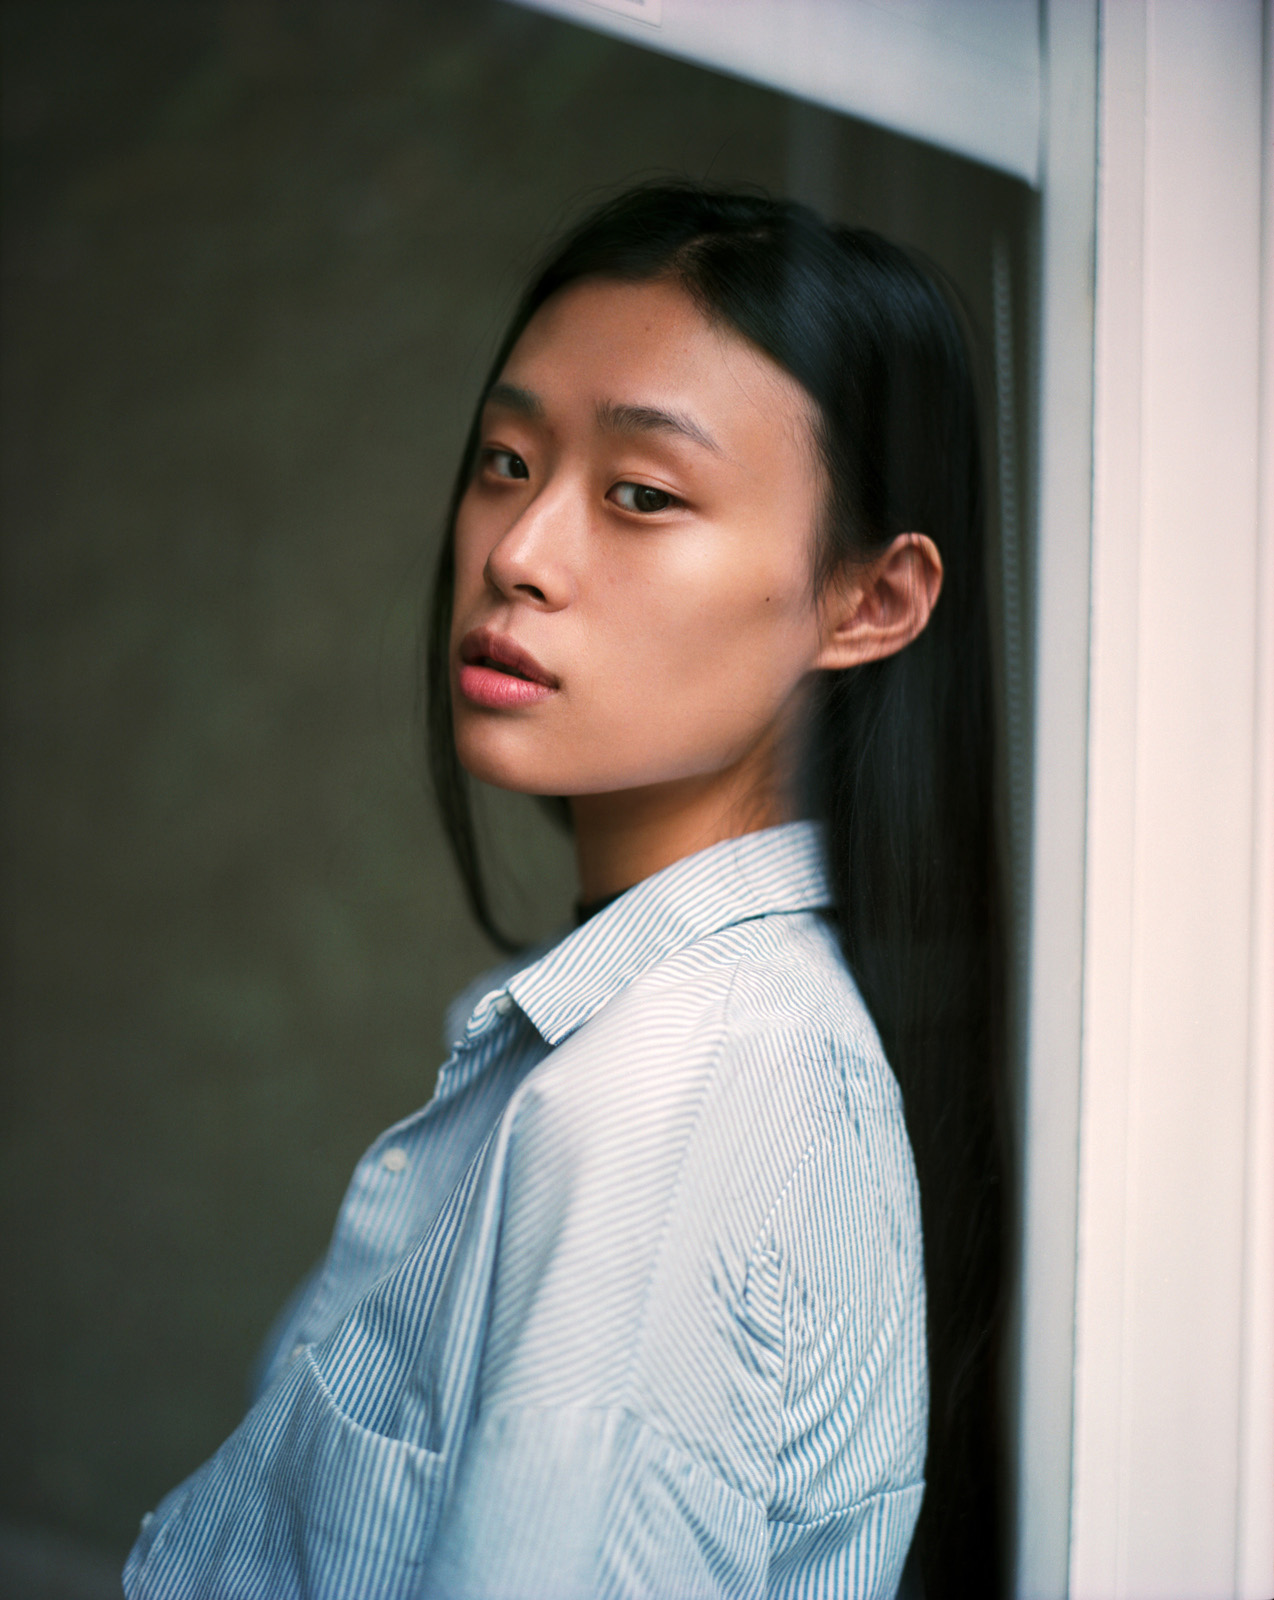 Meng Meng Wei, Model portrait, black and white photo.